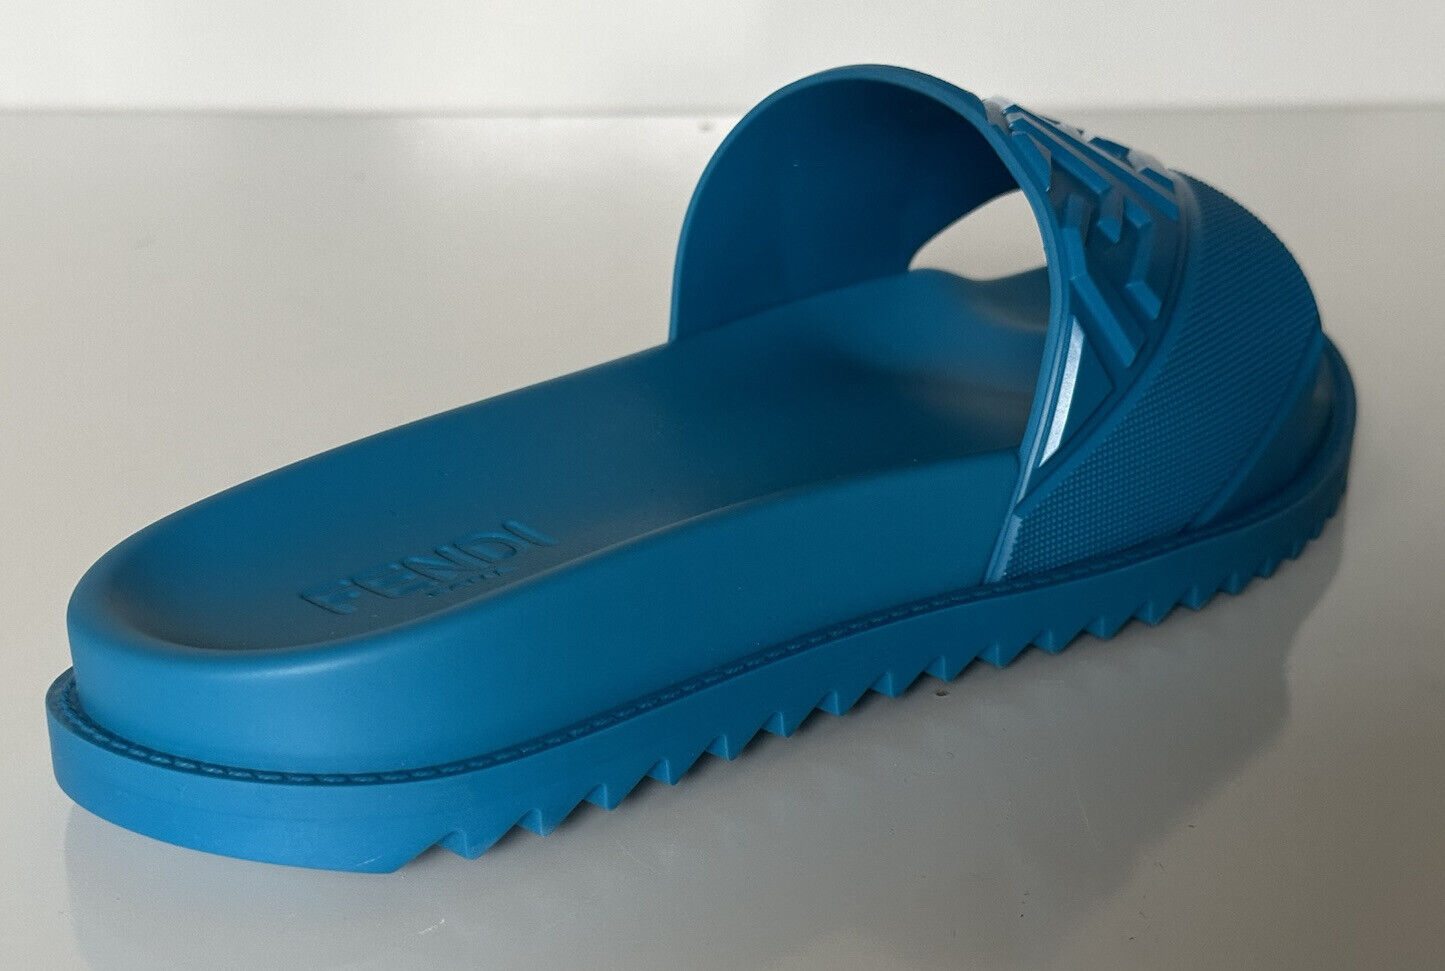 NIB $460 Fendi Men's FF Rubber Slide Sandals Cyber Blue 12 US/11 UK Italy 7X1377